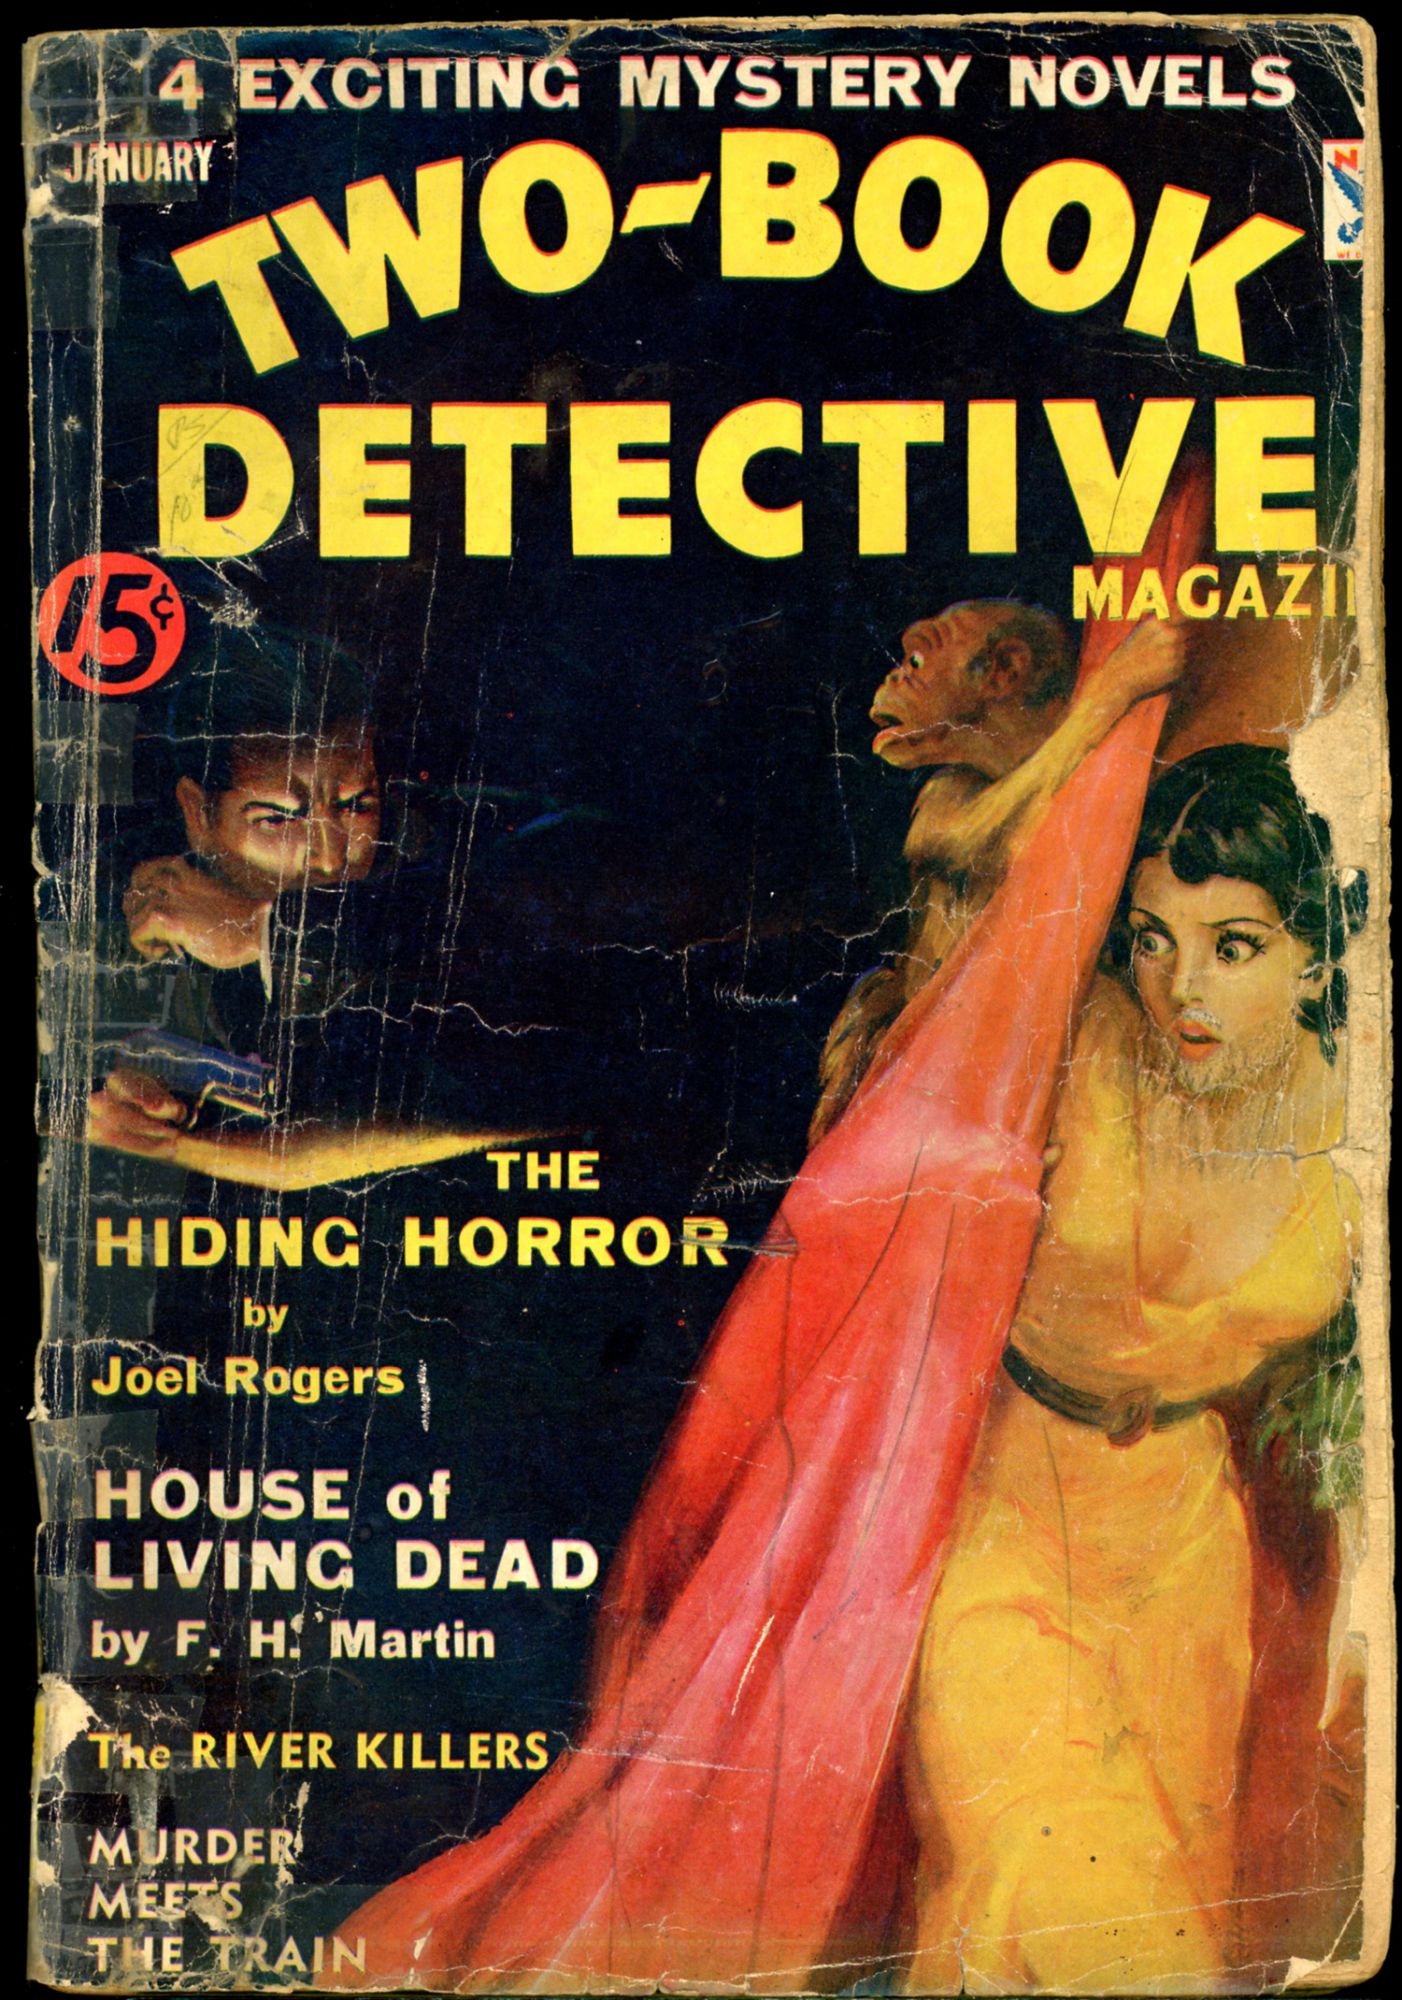 vintage detective magazine covers